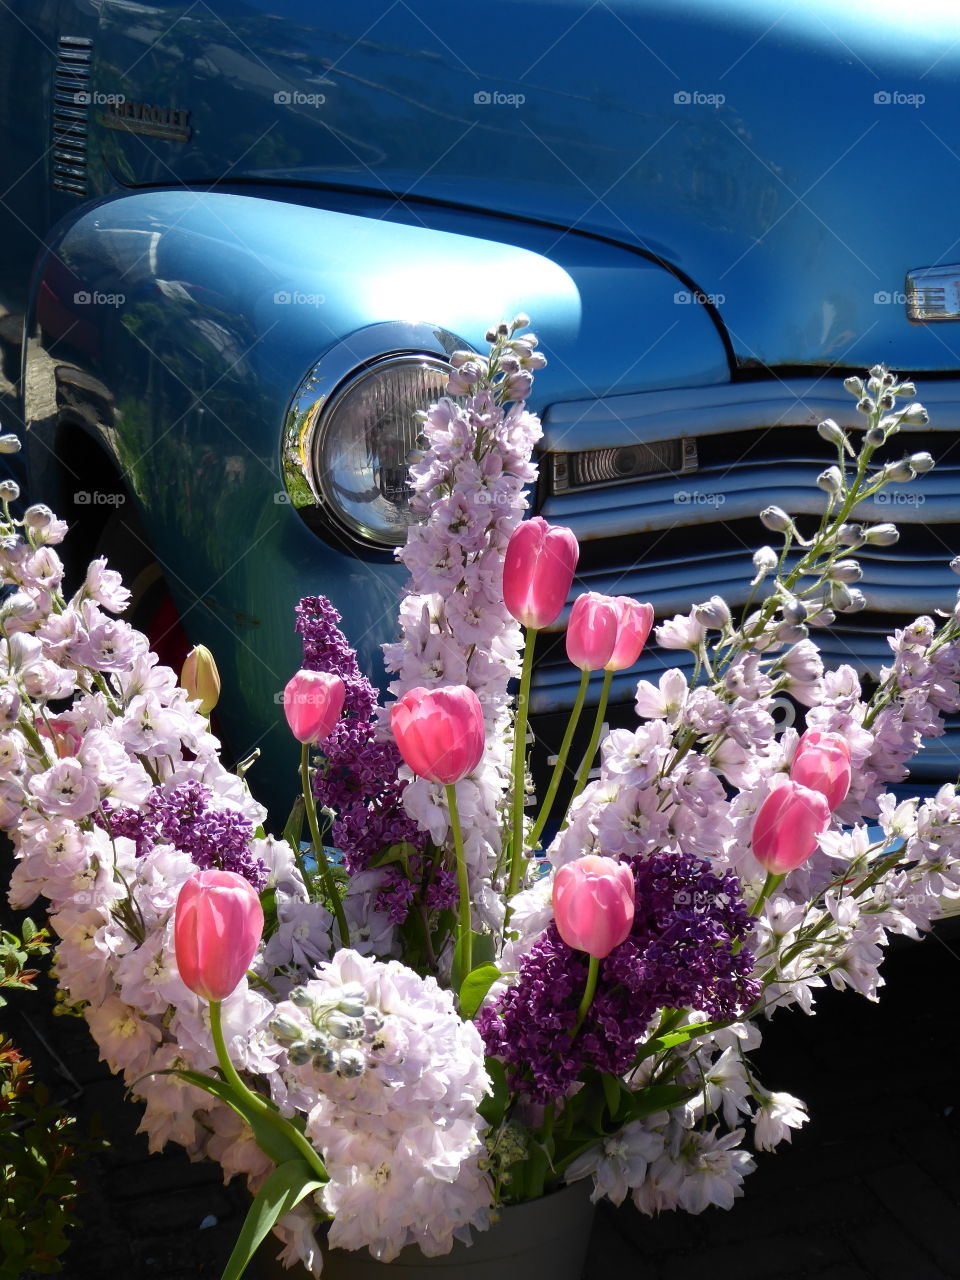 flower arrangement in front of a car